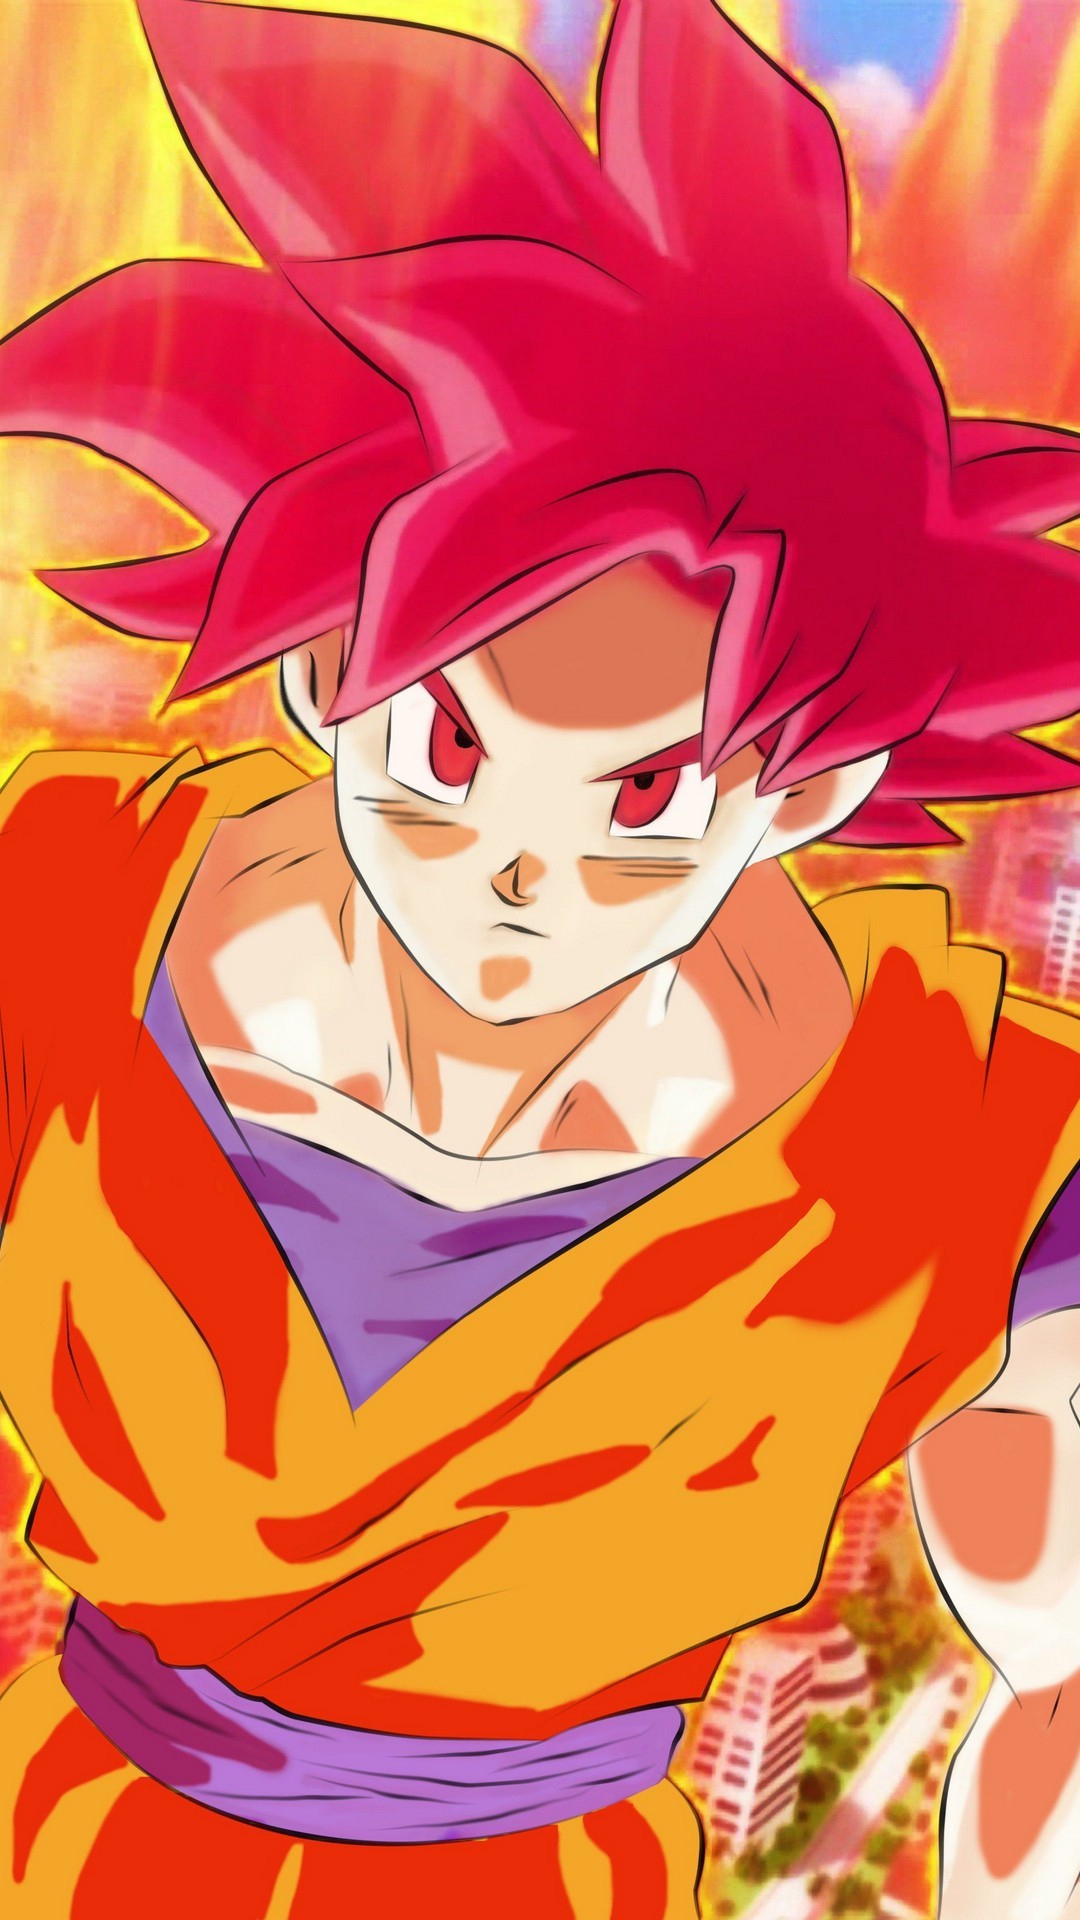 Wallpaper Goku Super Saiyan God Android with HD resolution 1080x1920